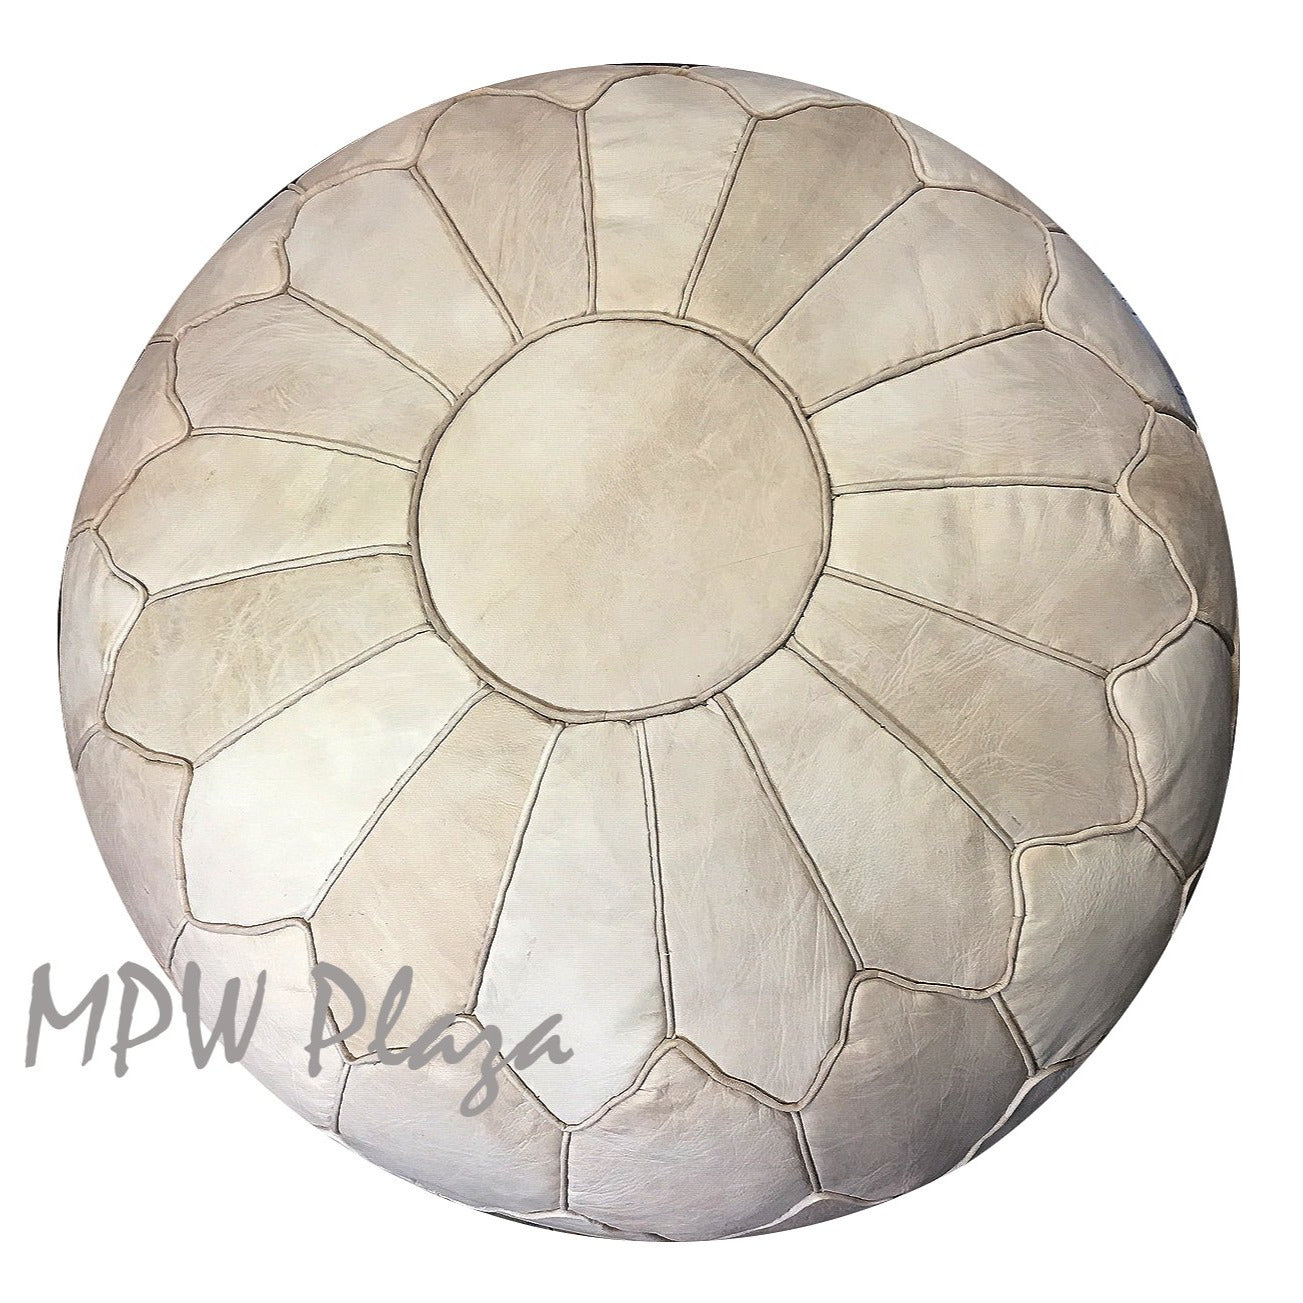 MPW Plaza® Retro Shell Moroccan Pouf, Natural tone, 19" x 29" Topshelf Moroccan Leather,  ottoman (Stuffed) freeshipping - MPW Plaza®